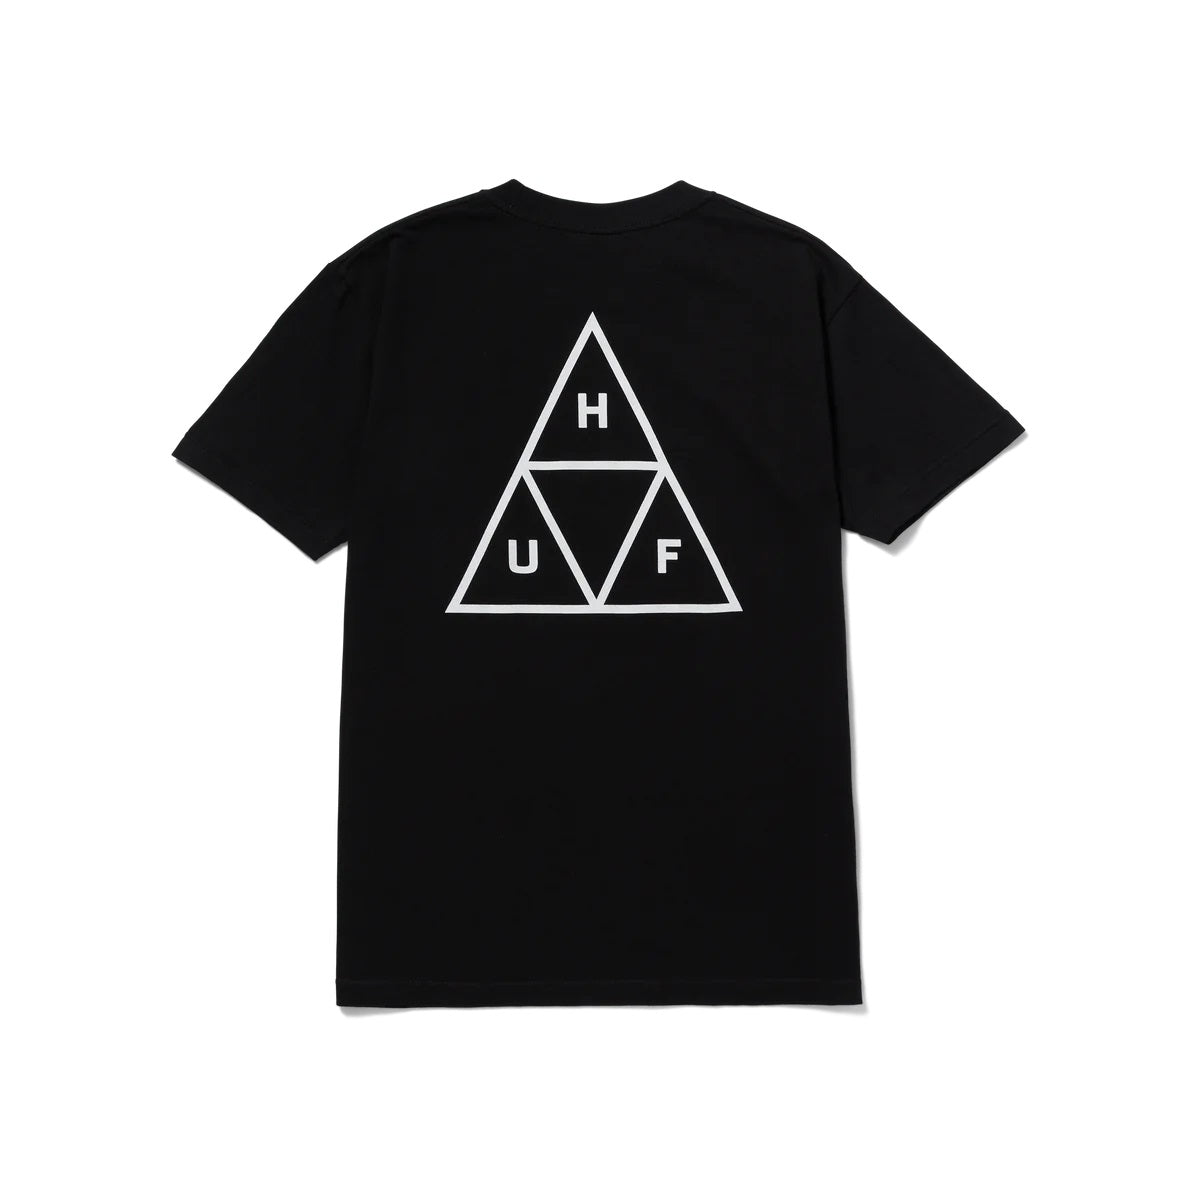 Huf Huf Set Triangle Tee Black T-Shirt